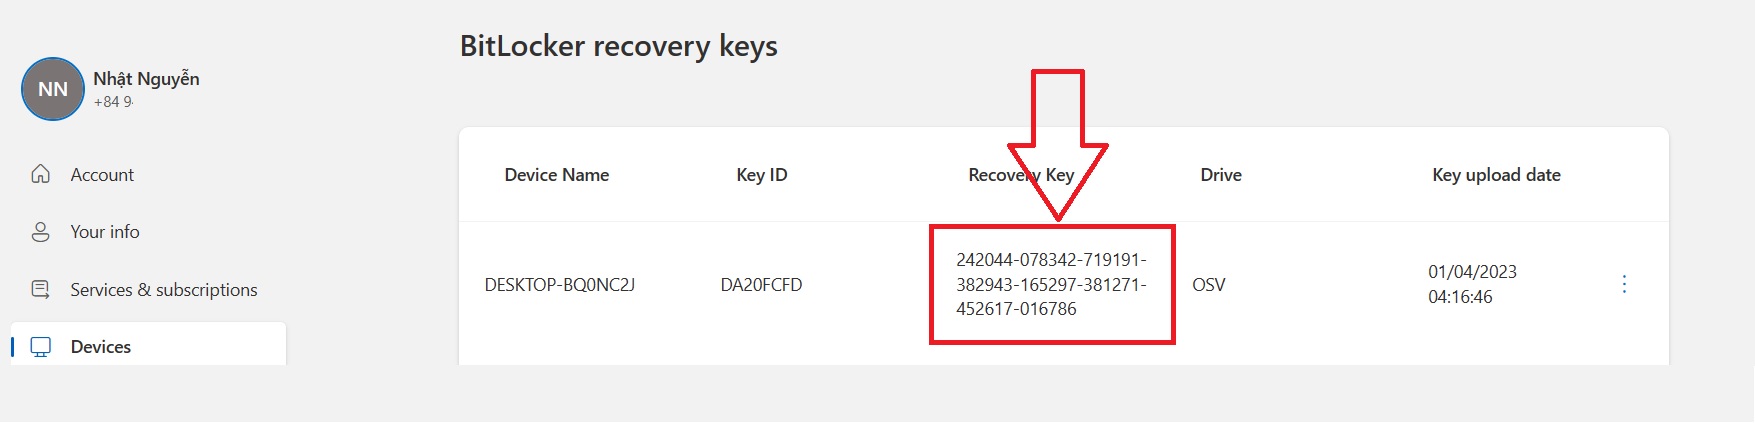 BitLocker recovery keys